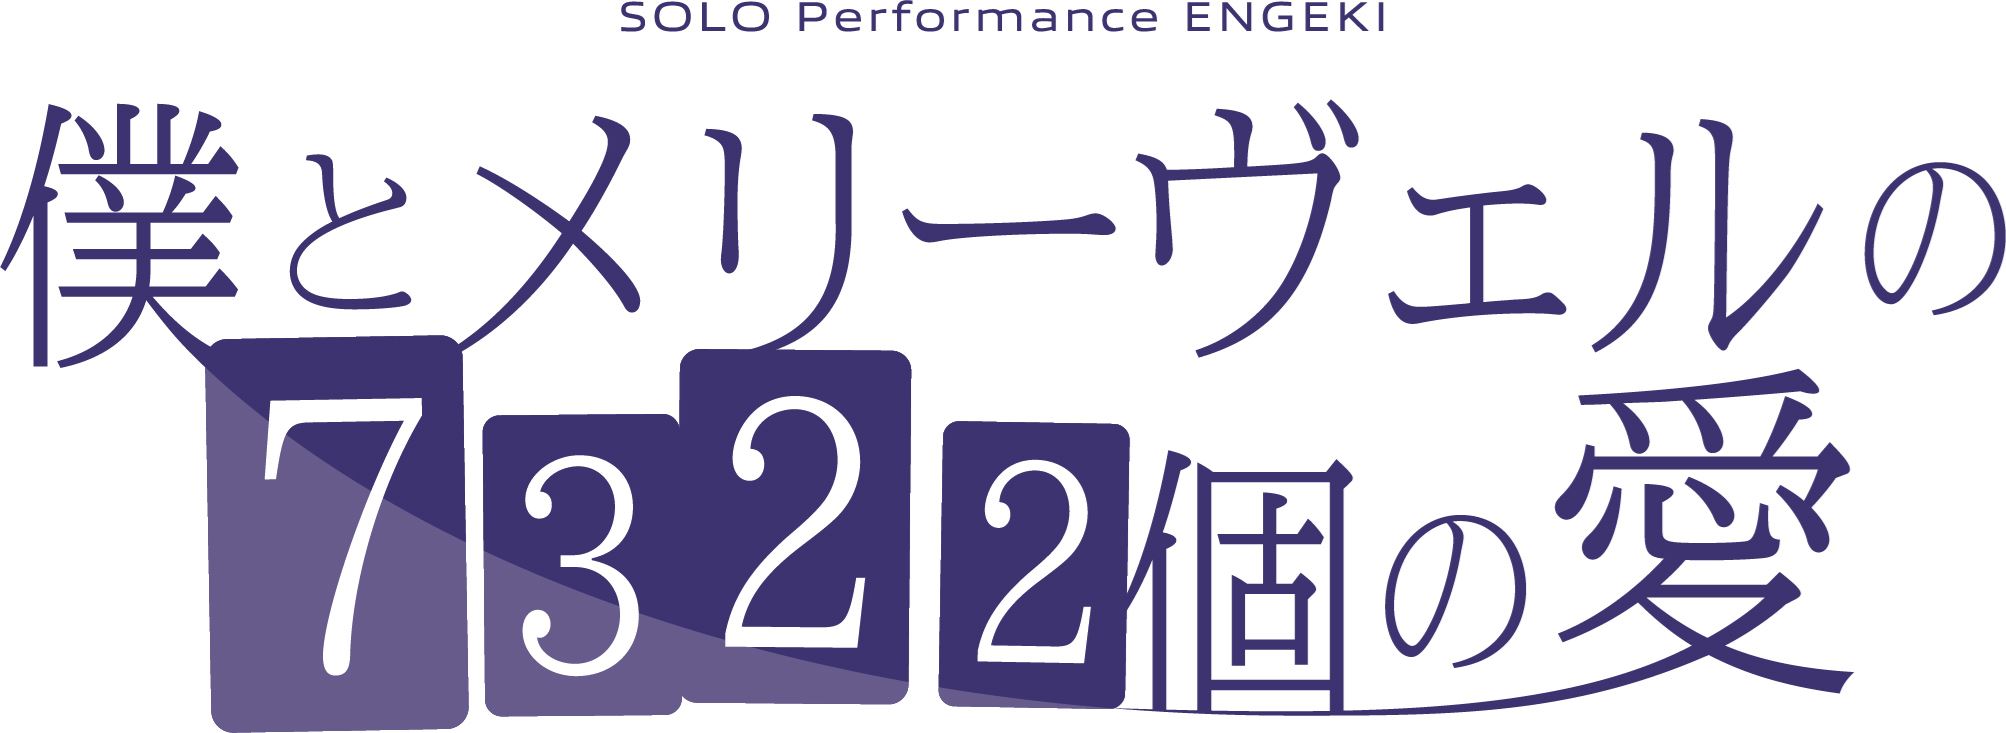 SOLO Performance ENGEKI「僕とメリーヴェルの7322個の愛」ロゴ